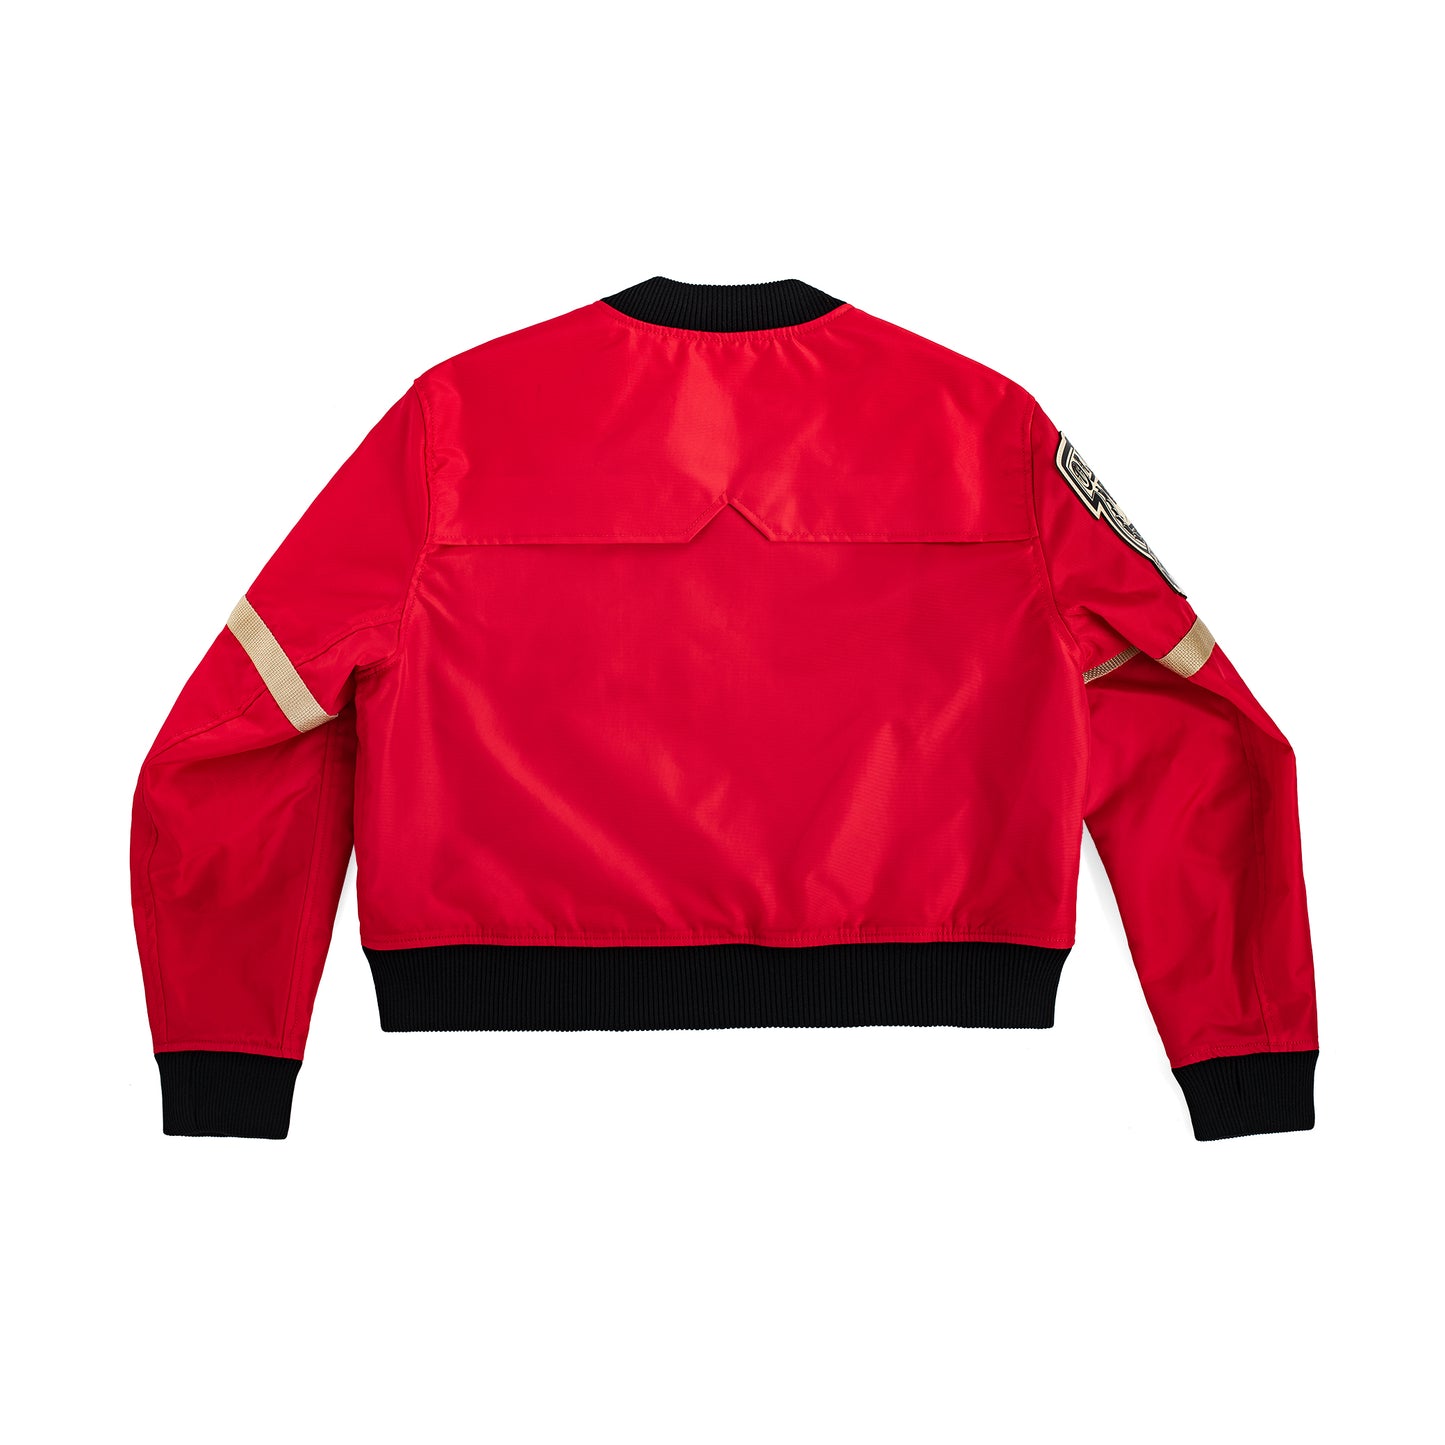 OLD YORK "APPLE" VARSITY Jacket (Red)